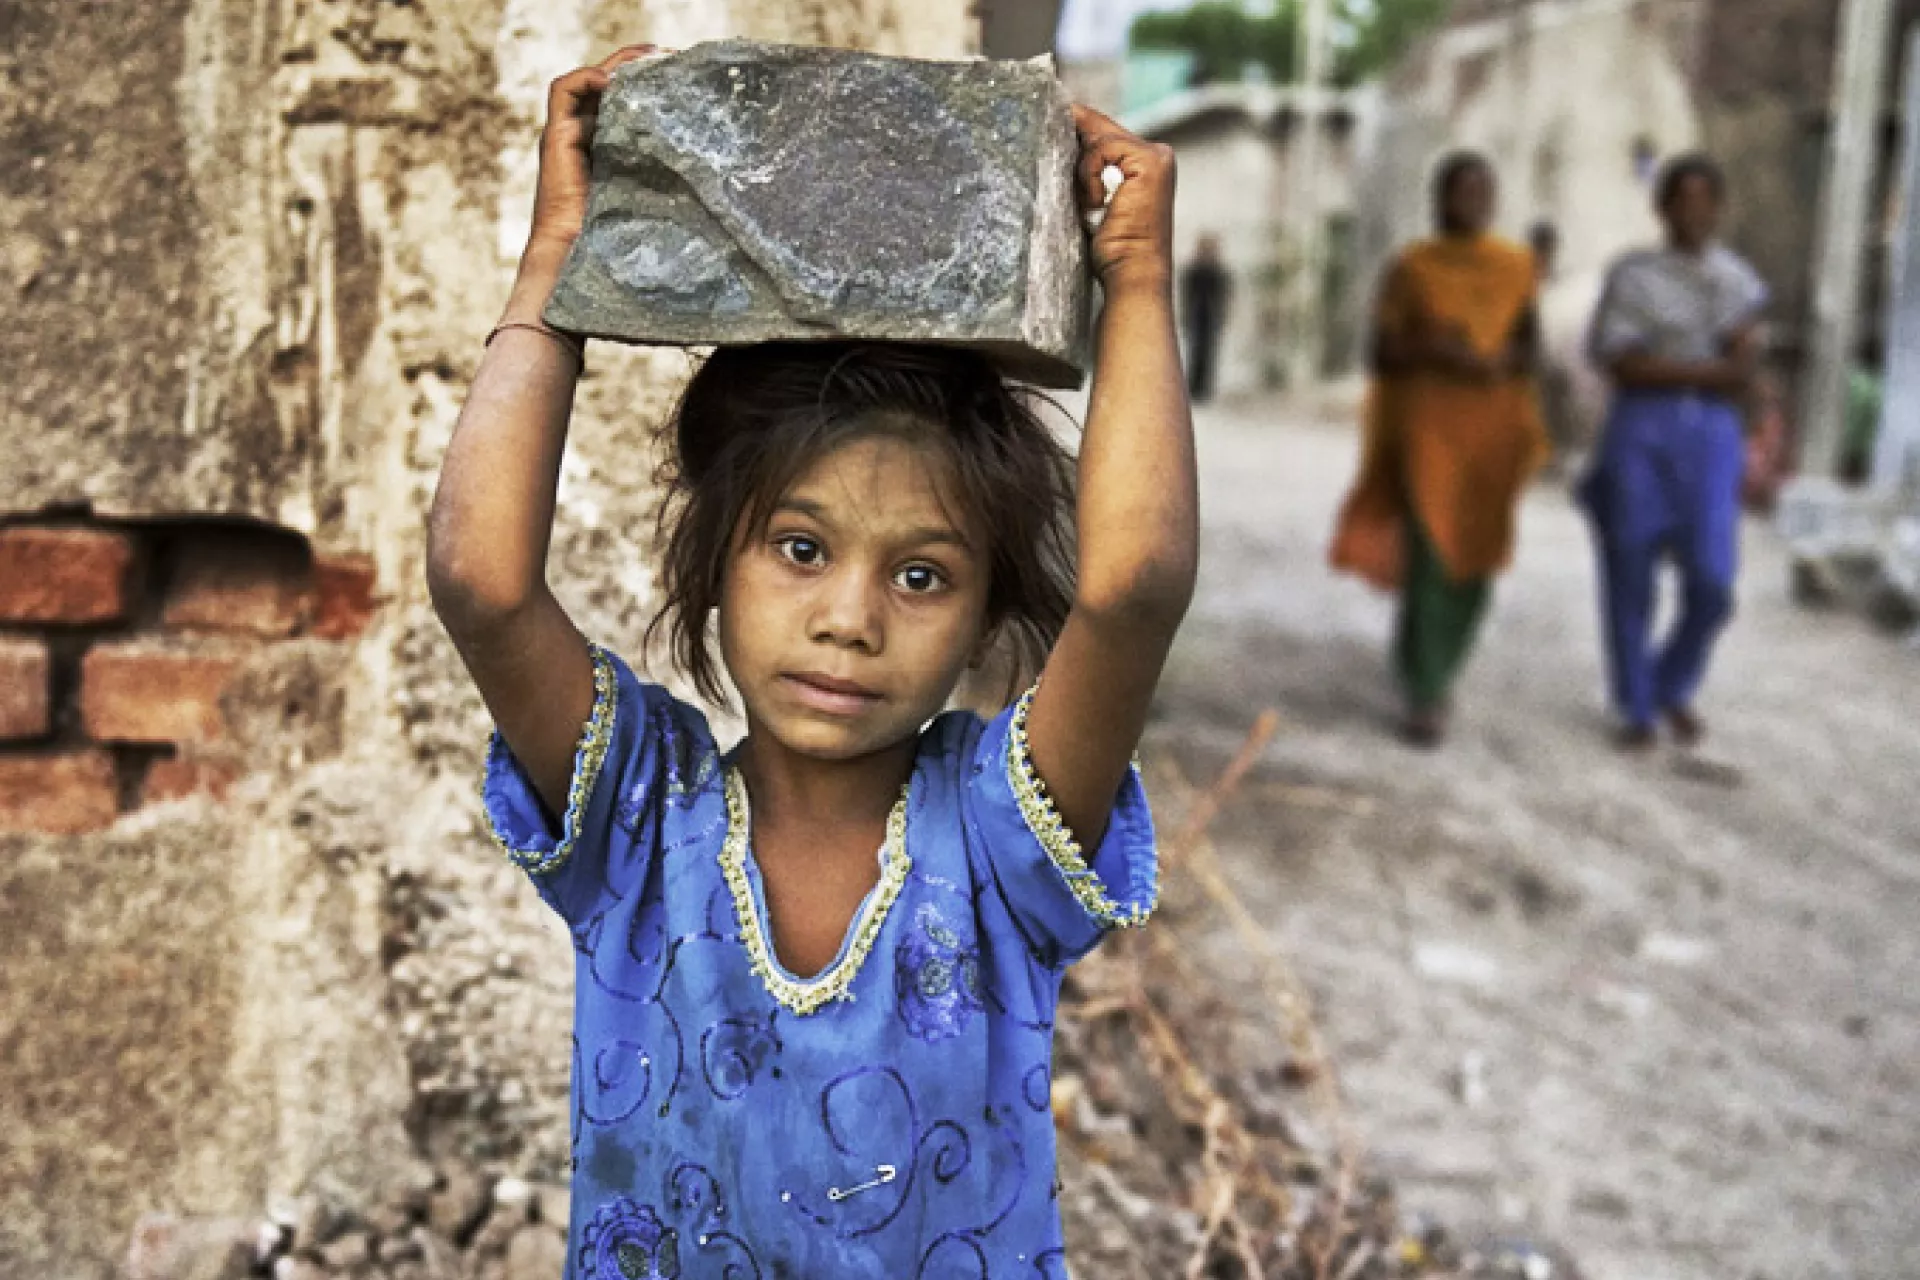 Girl in India works selling bricks